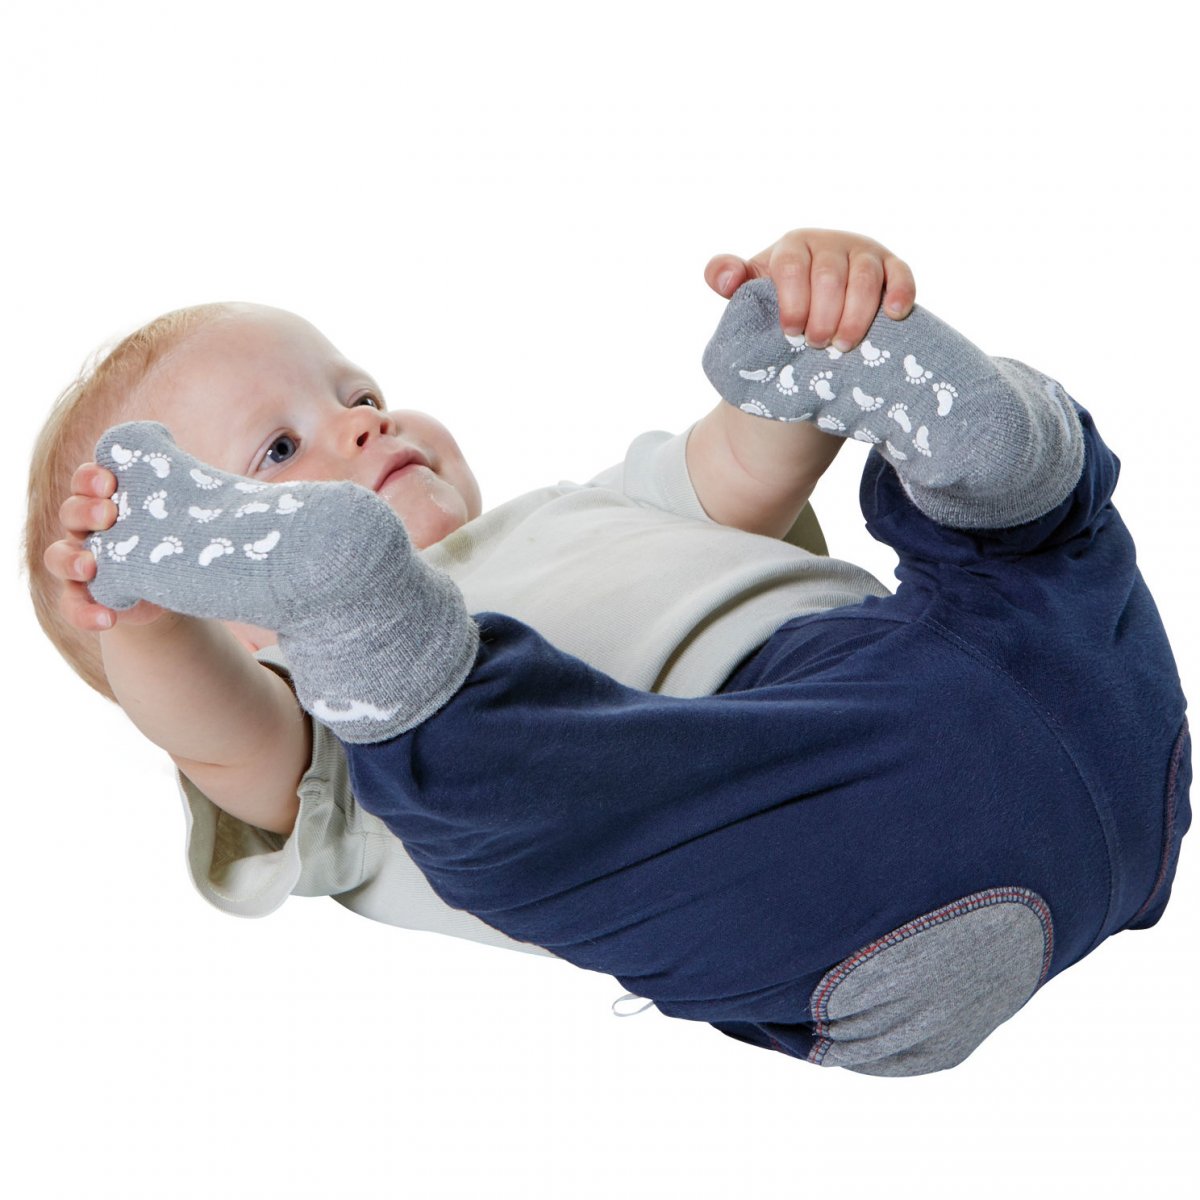 Calze Antiscivolo in Baby Alpaka per bambini